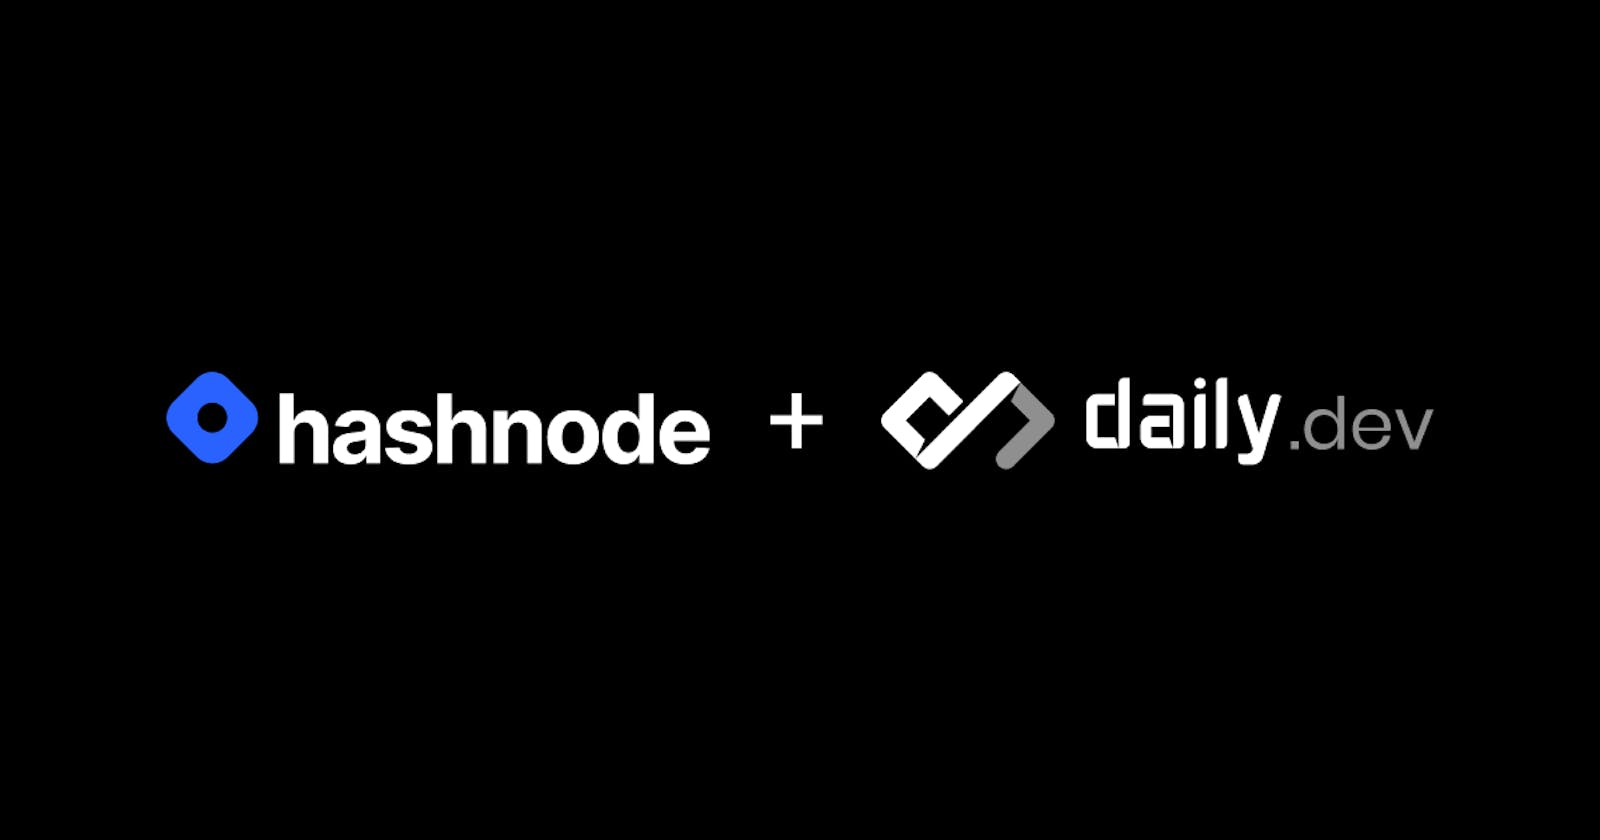 Announcing Hashnode + daily.dev integration